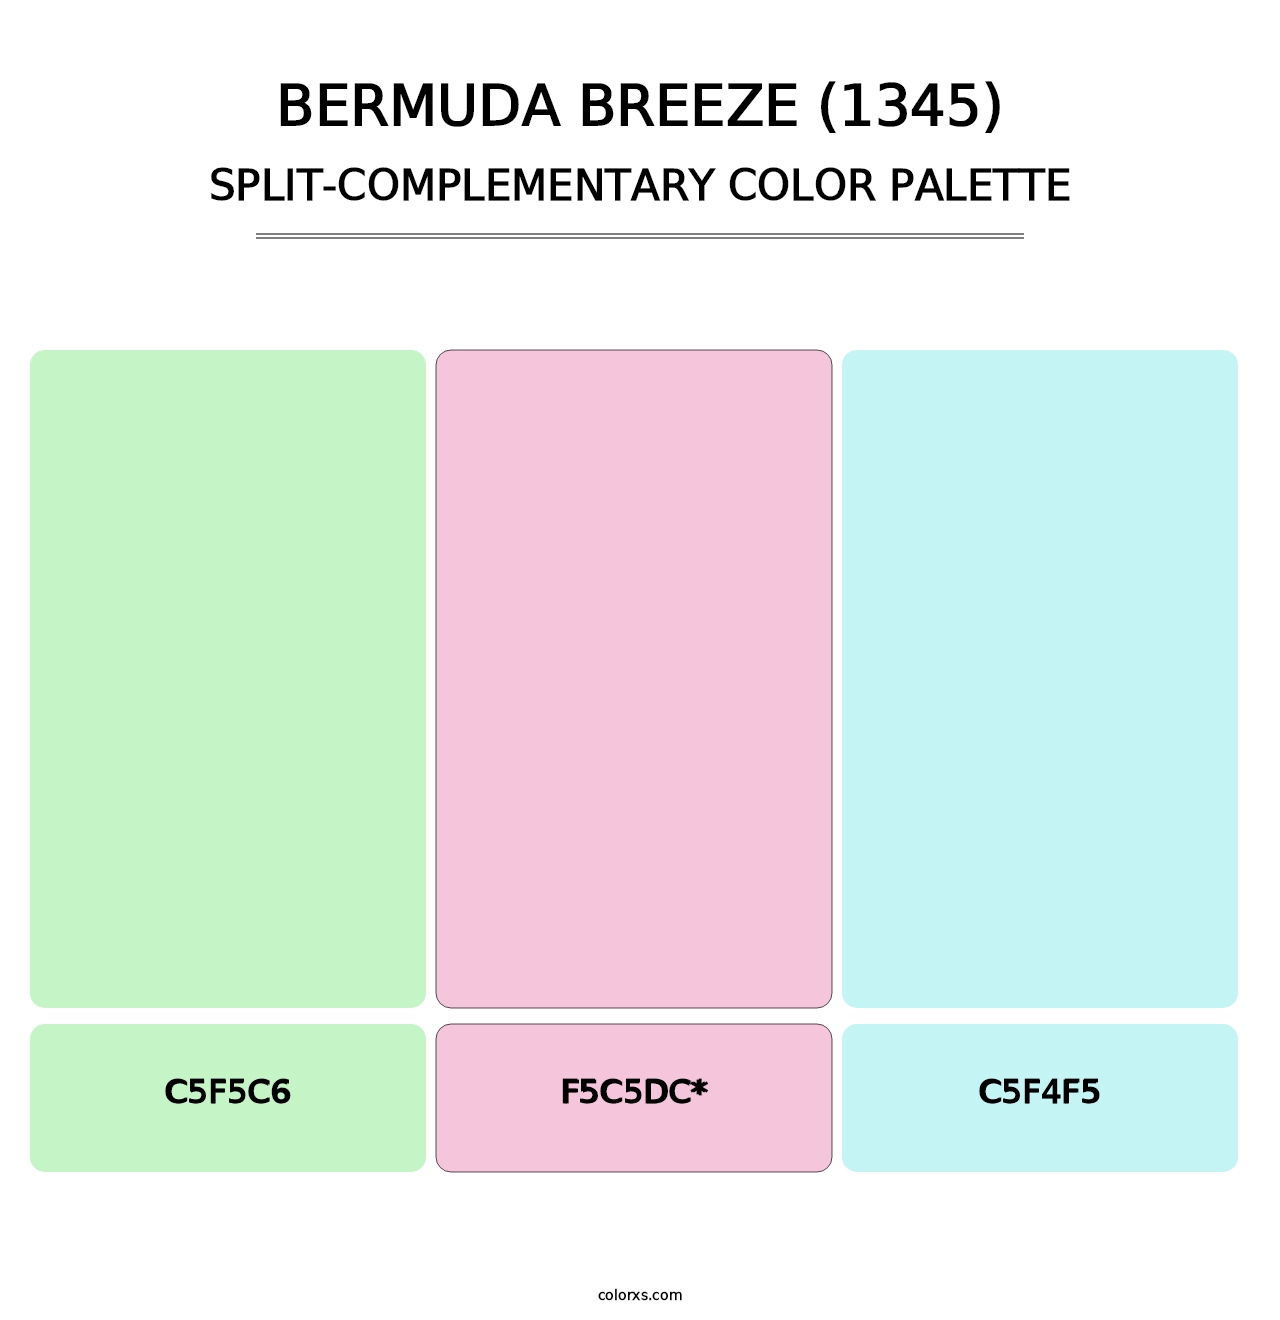 Bermuda Breeze (1345) - Split-Complementary Color Palette